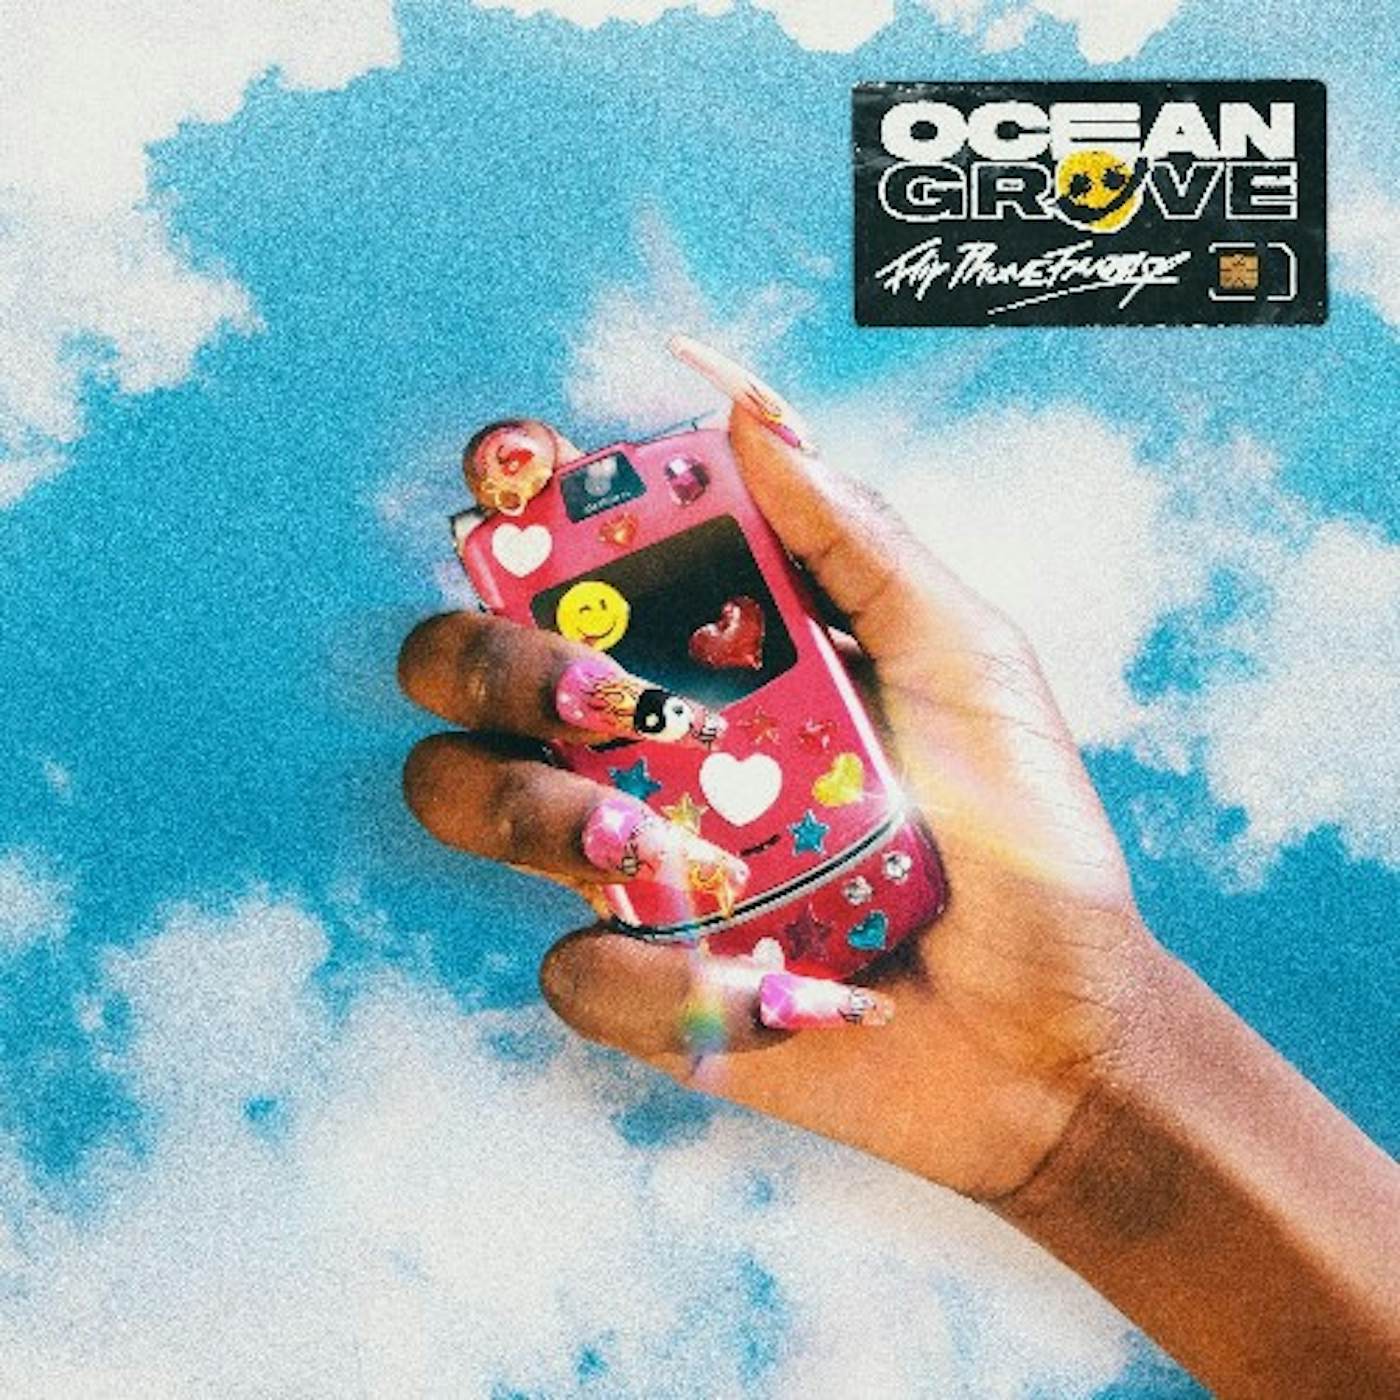 Ocean Grove Flip Phone Fantasy Vinyl Record